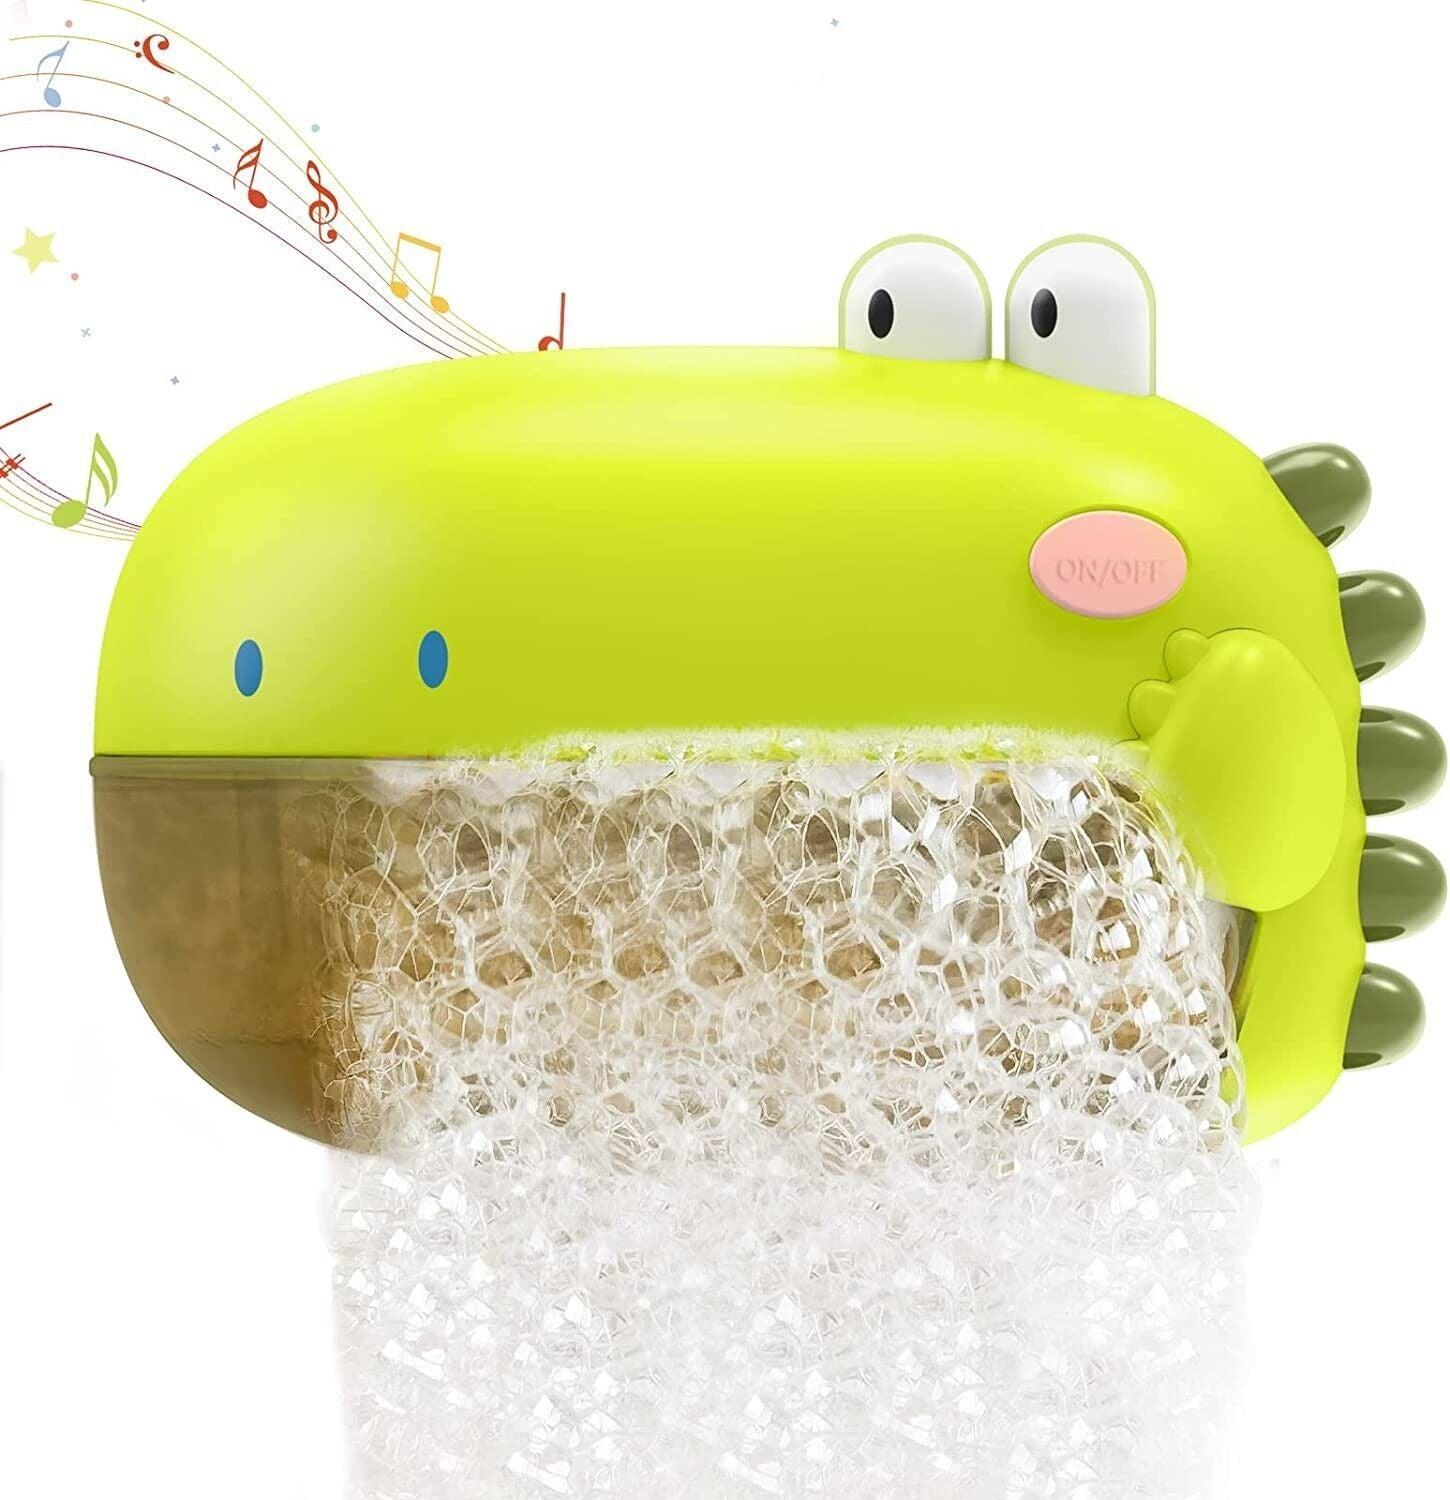 Dinosaur Bubble Machine Bubble Maker Fun LG Bath Musical Baby Toy Shower